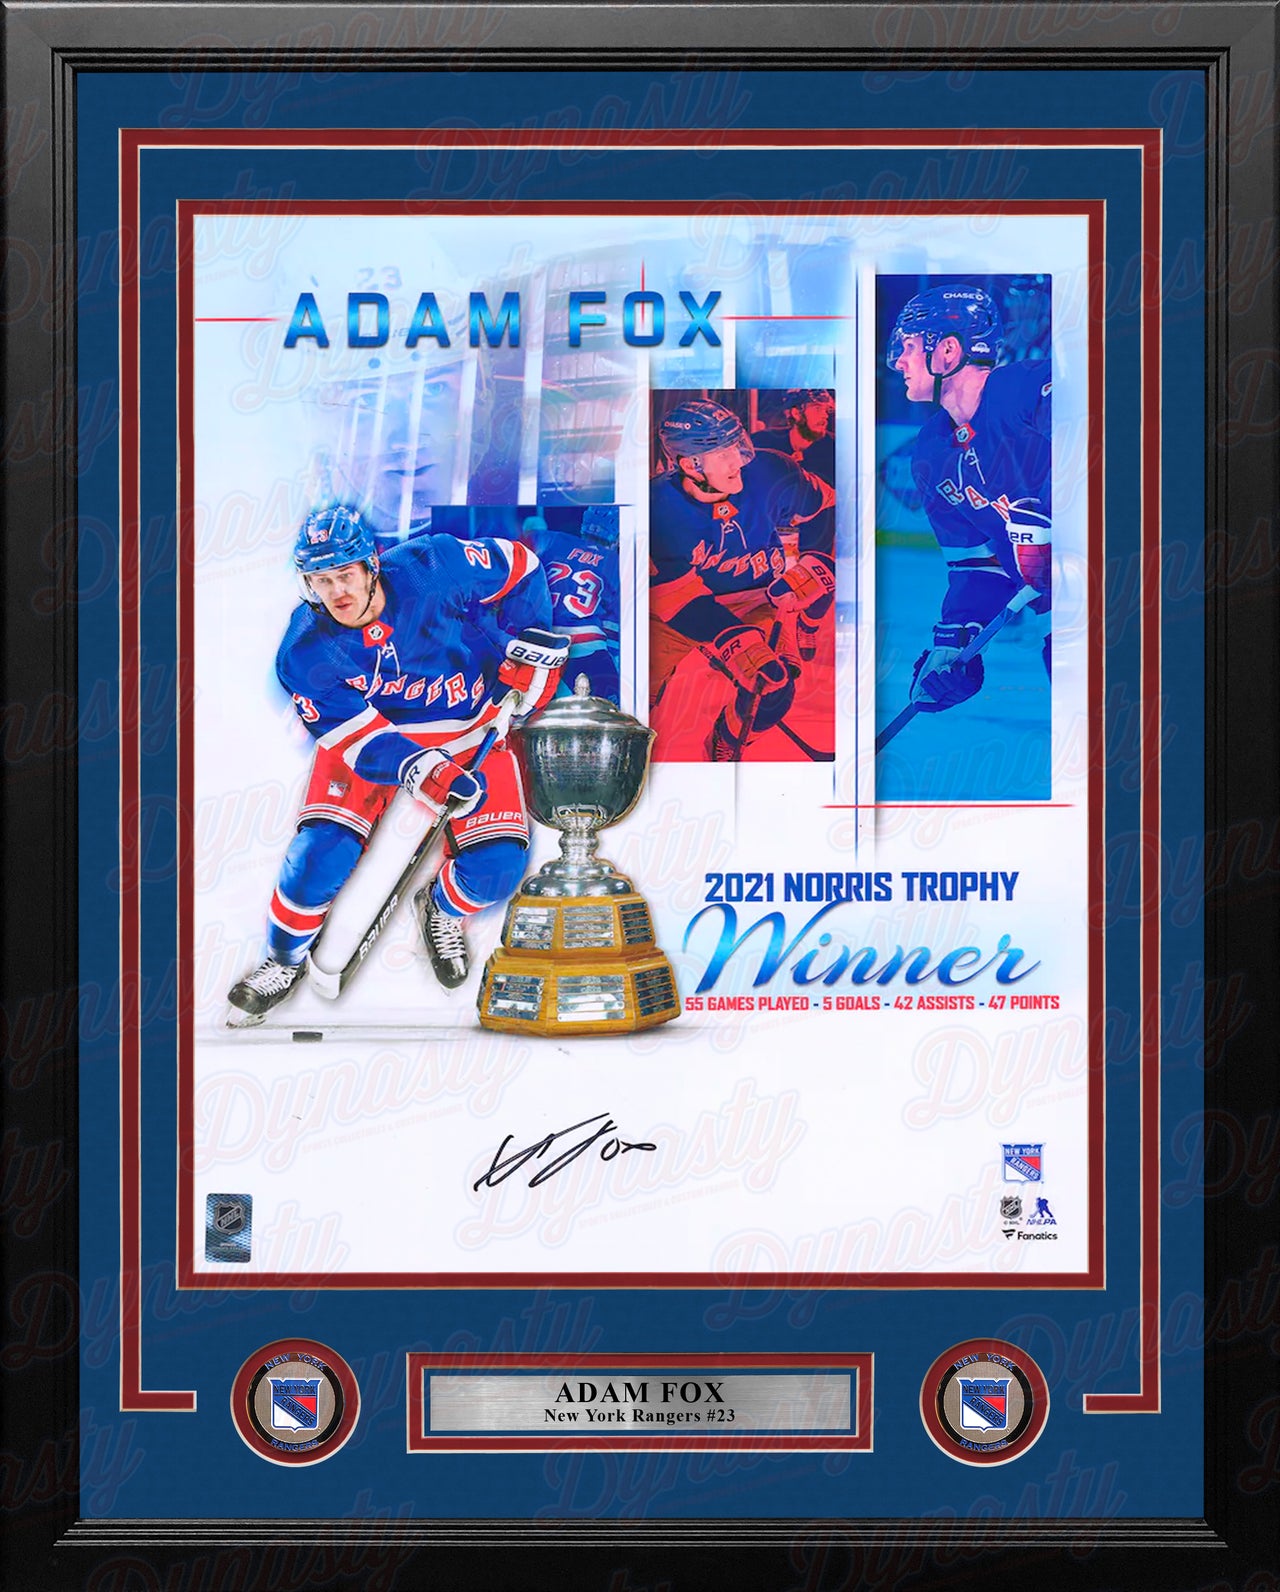 Adam Fox Norris Trophy New York Rangers Autographed 16" x 20" Framed Hockey Collage Photo - Dynasty Sports & Framing 